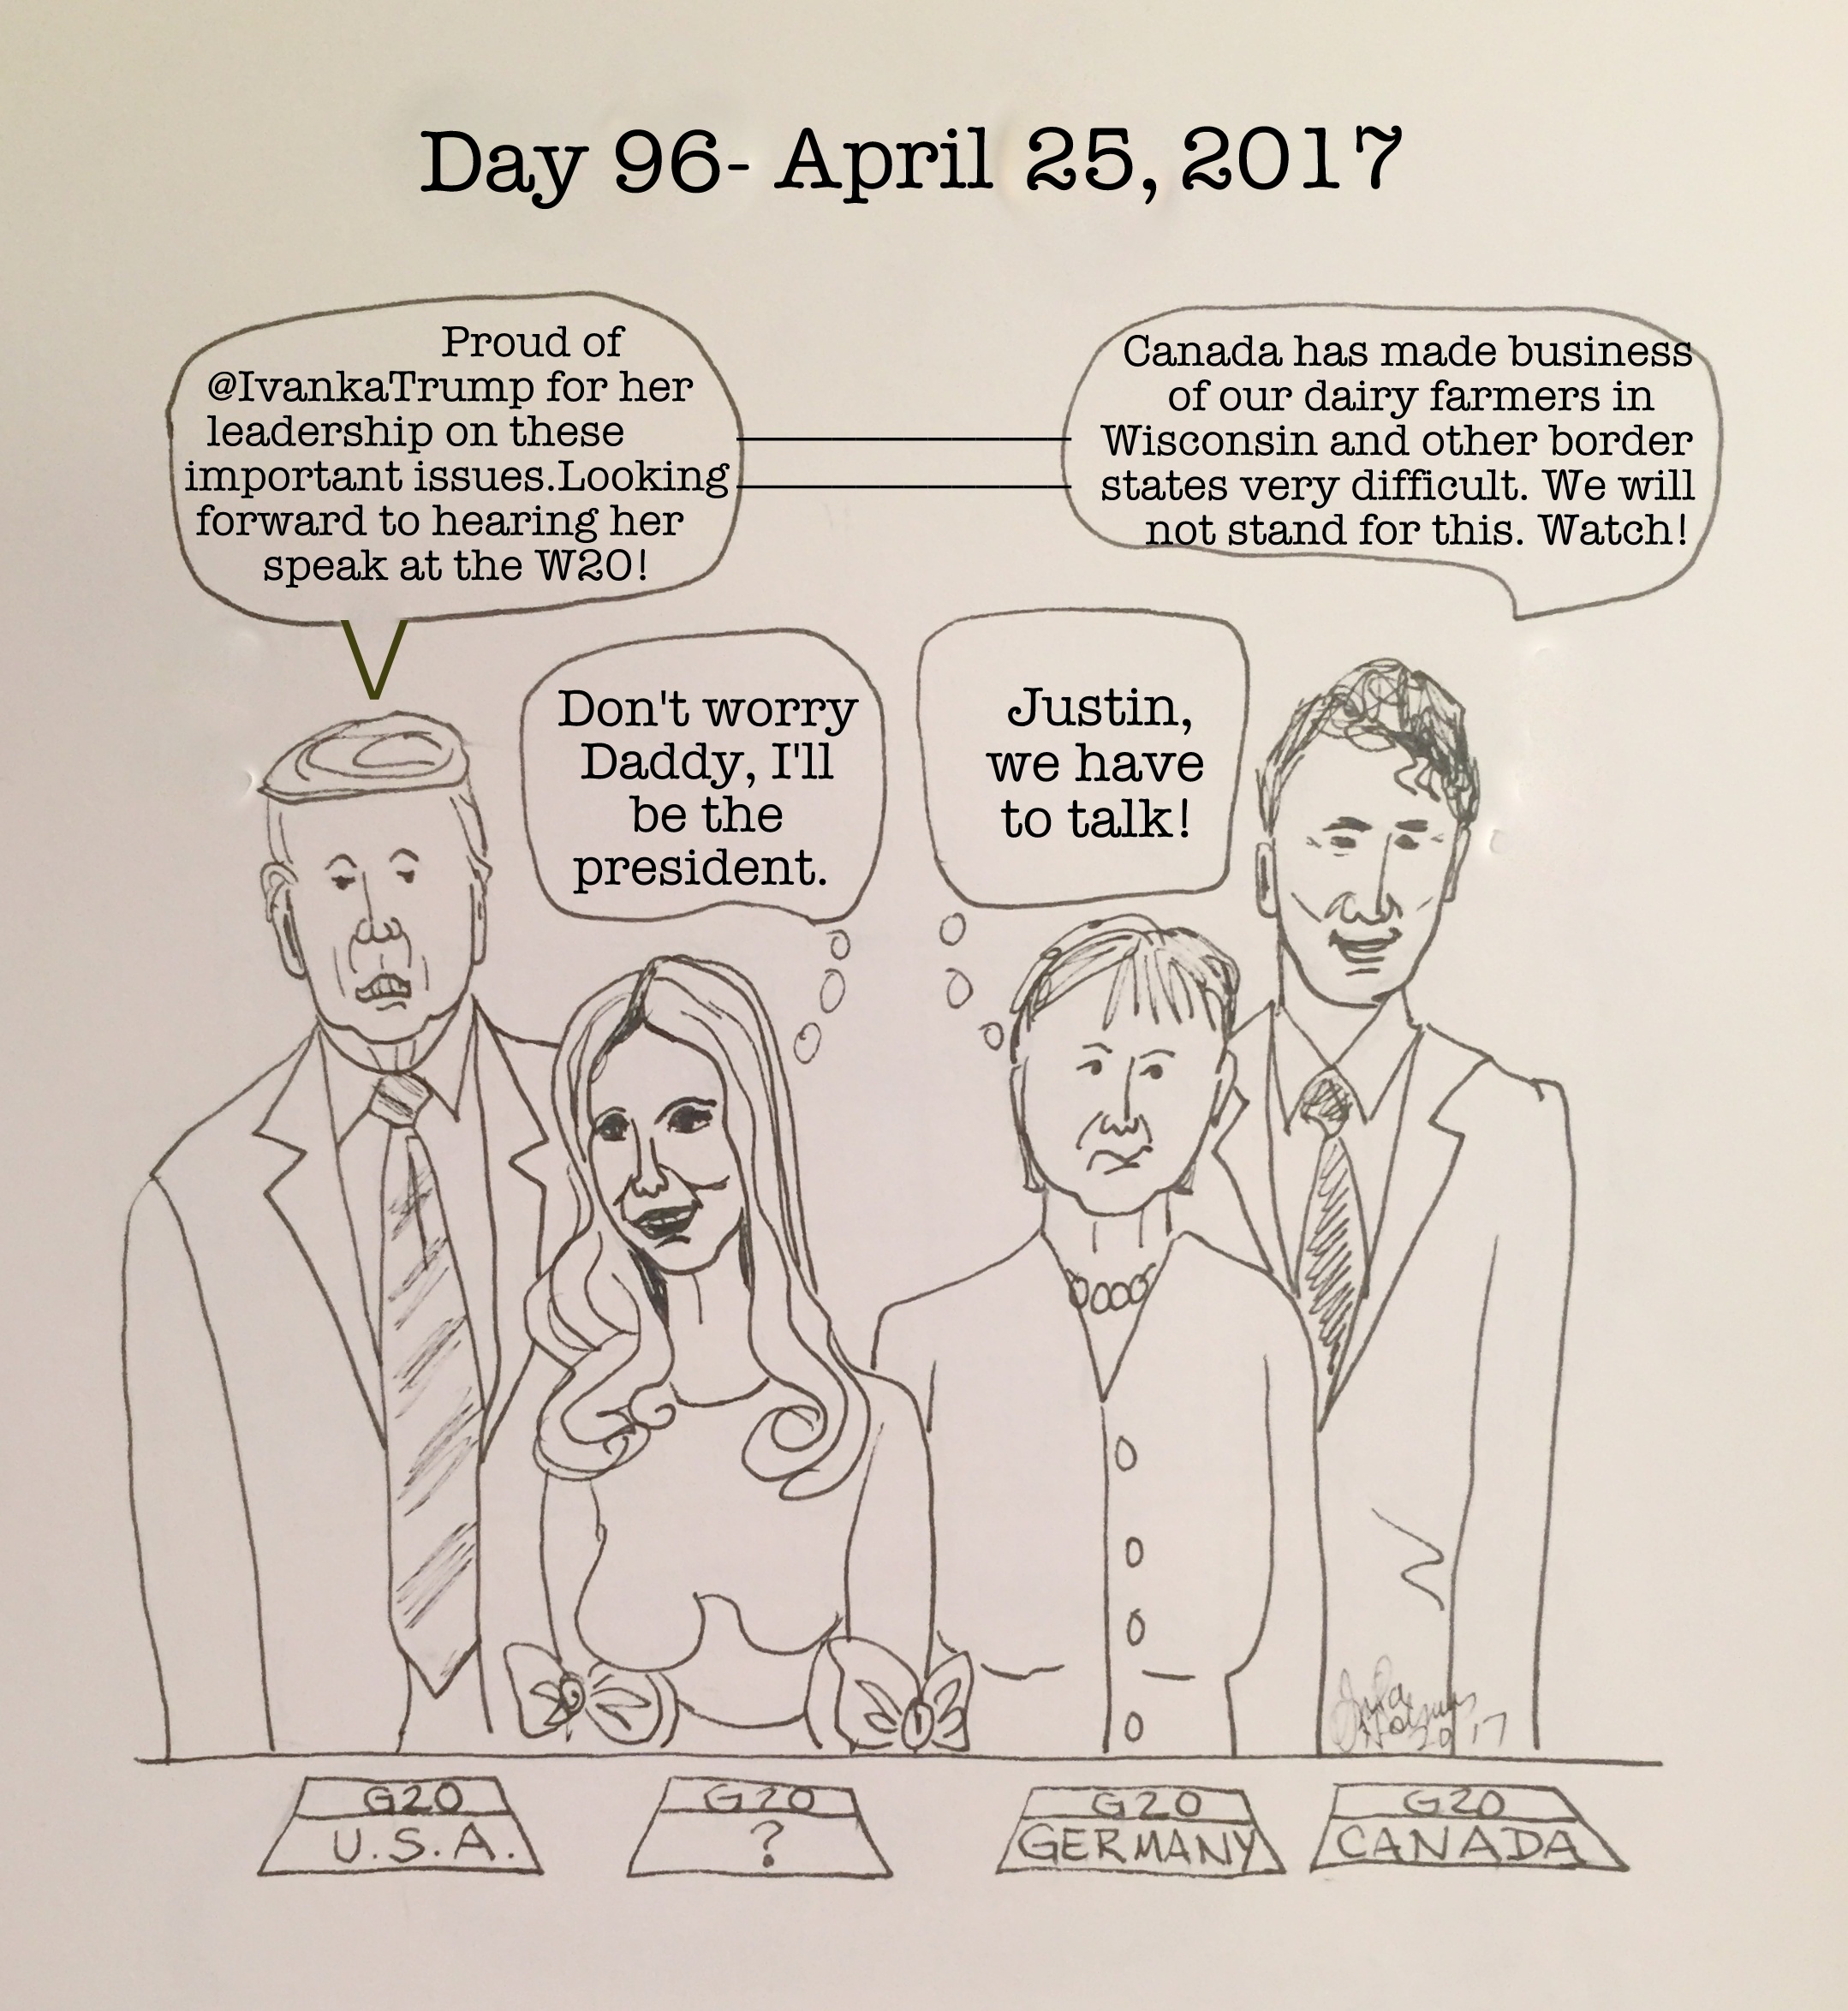 Day 96- April 25, 2017- Copyright 2017